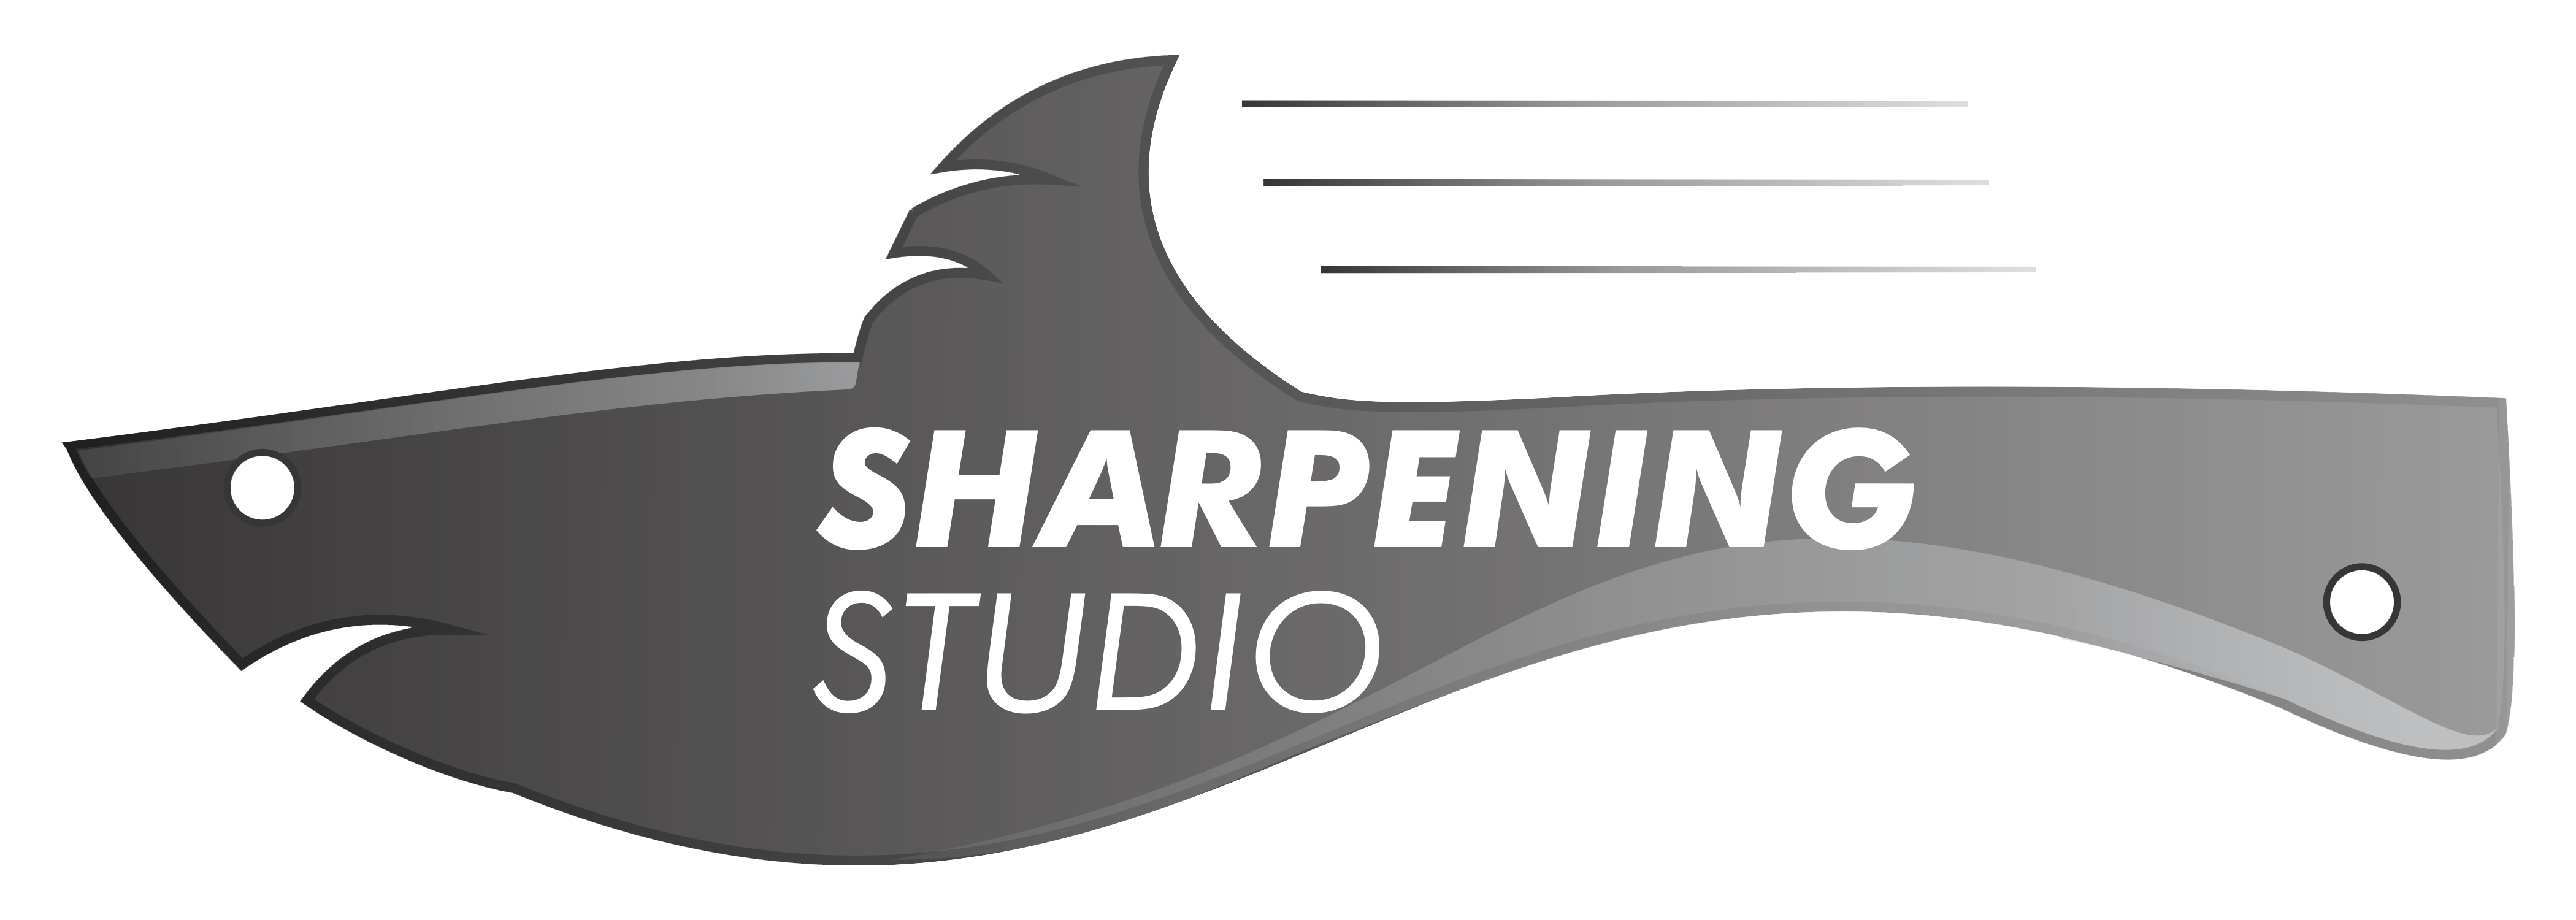 Professional Sharpening Studio